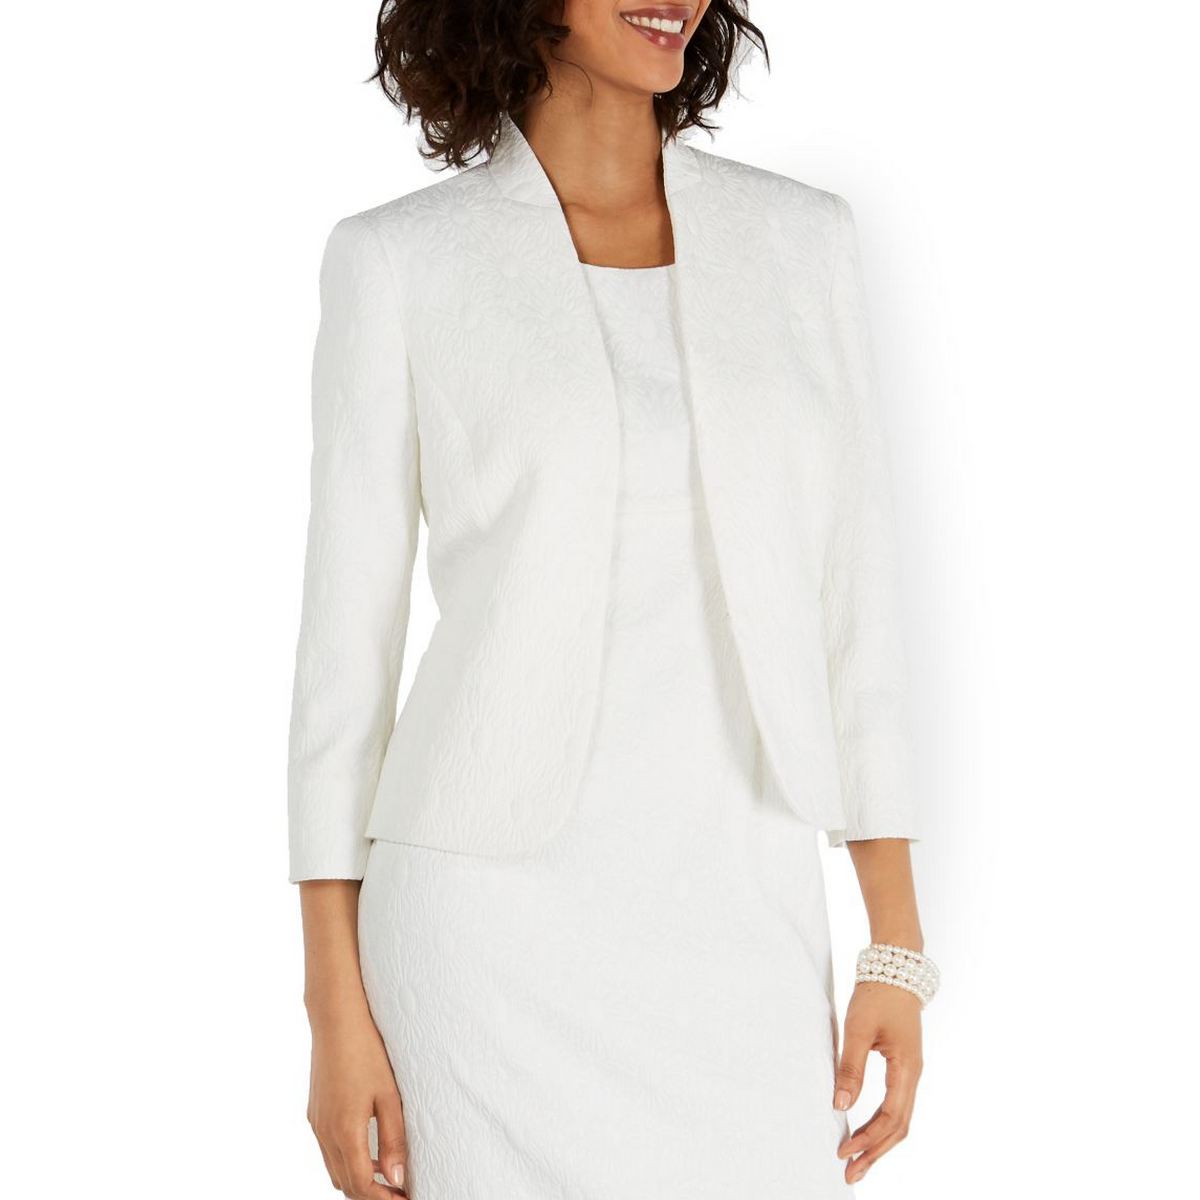 KASPER NEW Women's White Floral-jacquard Lined Blazer Jacket Top 16 ...